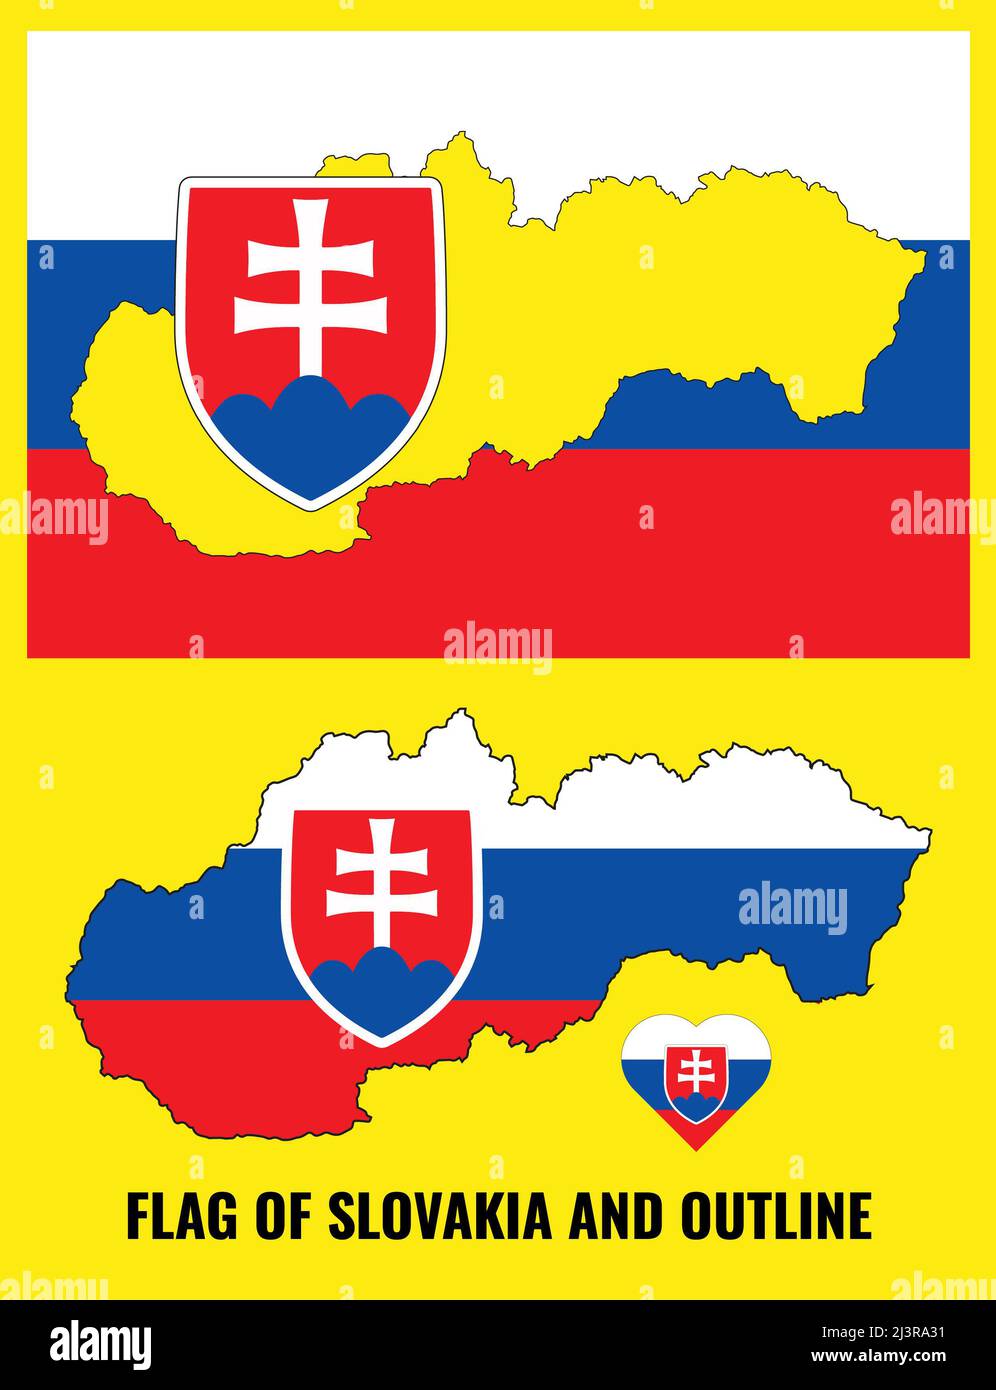 Slovakia flag and outline. Flag map of Slovakia. Illustration. Stock Photo